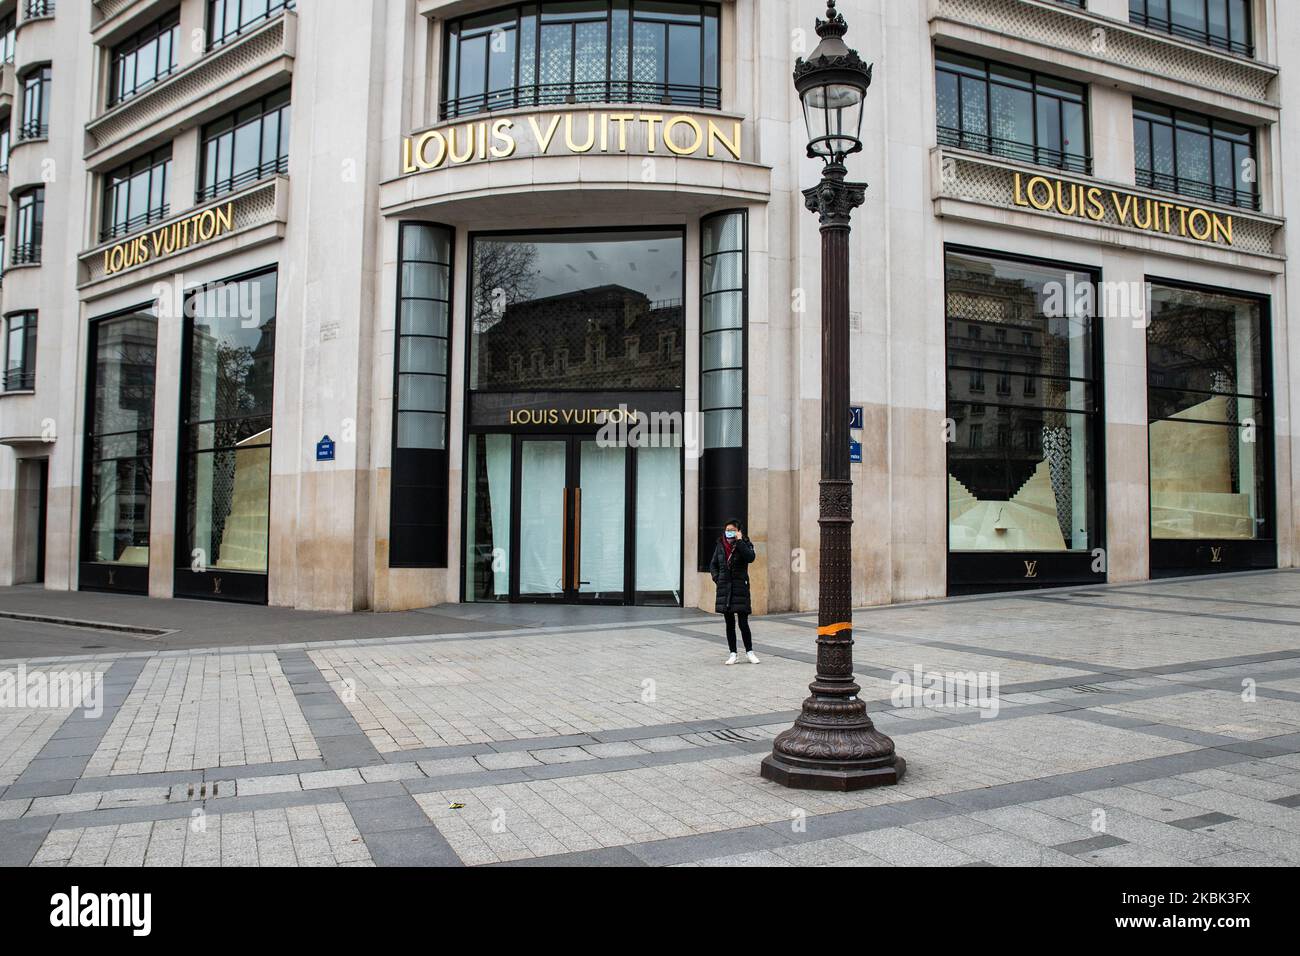 PARIS, FRANCE - JUN 6, 2015: Louis Vuitton in the Galeries